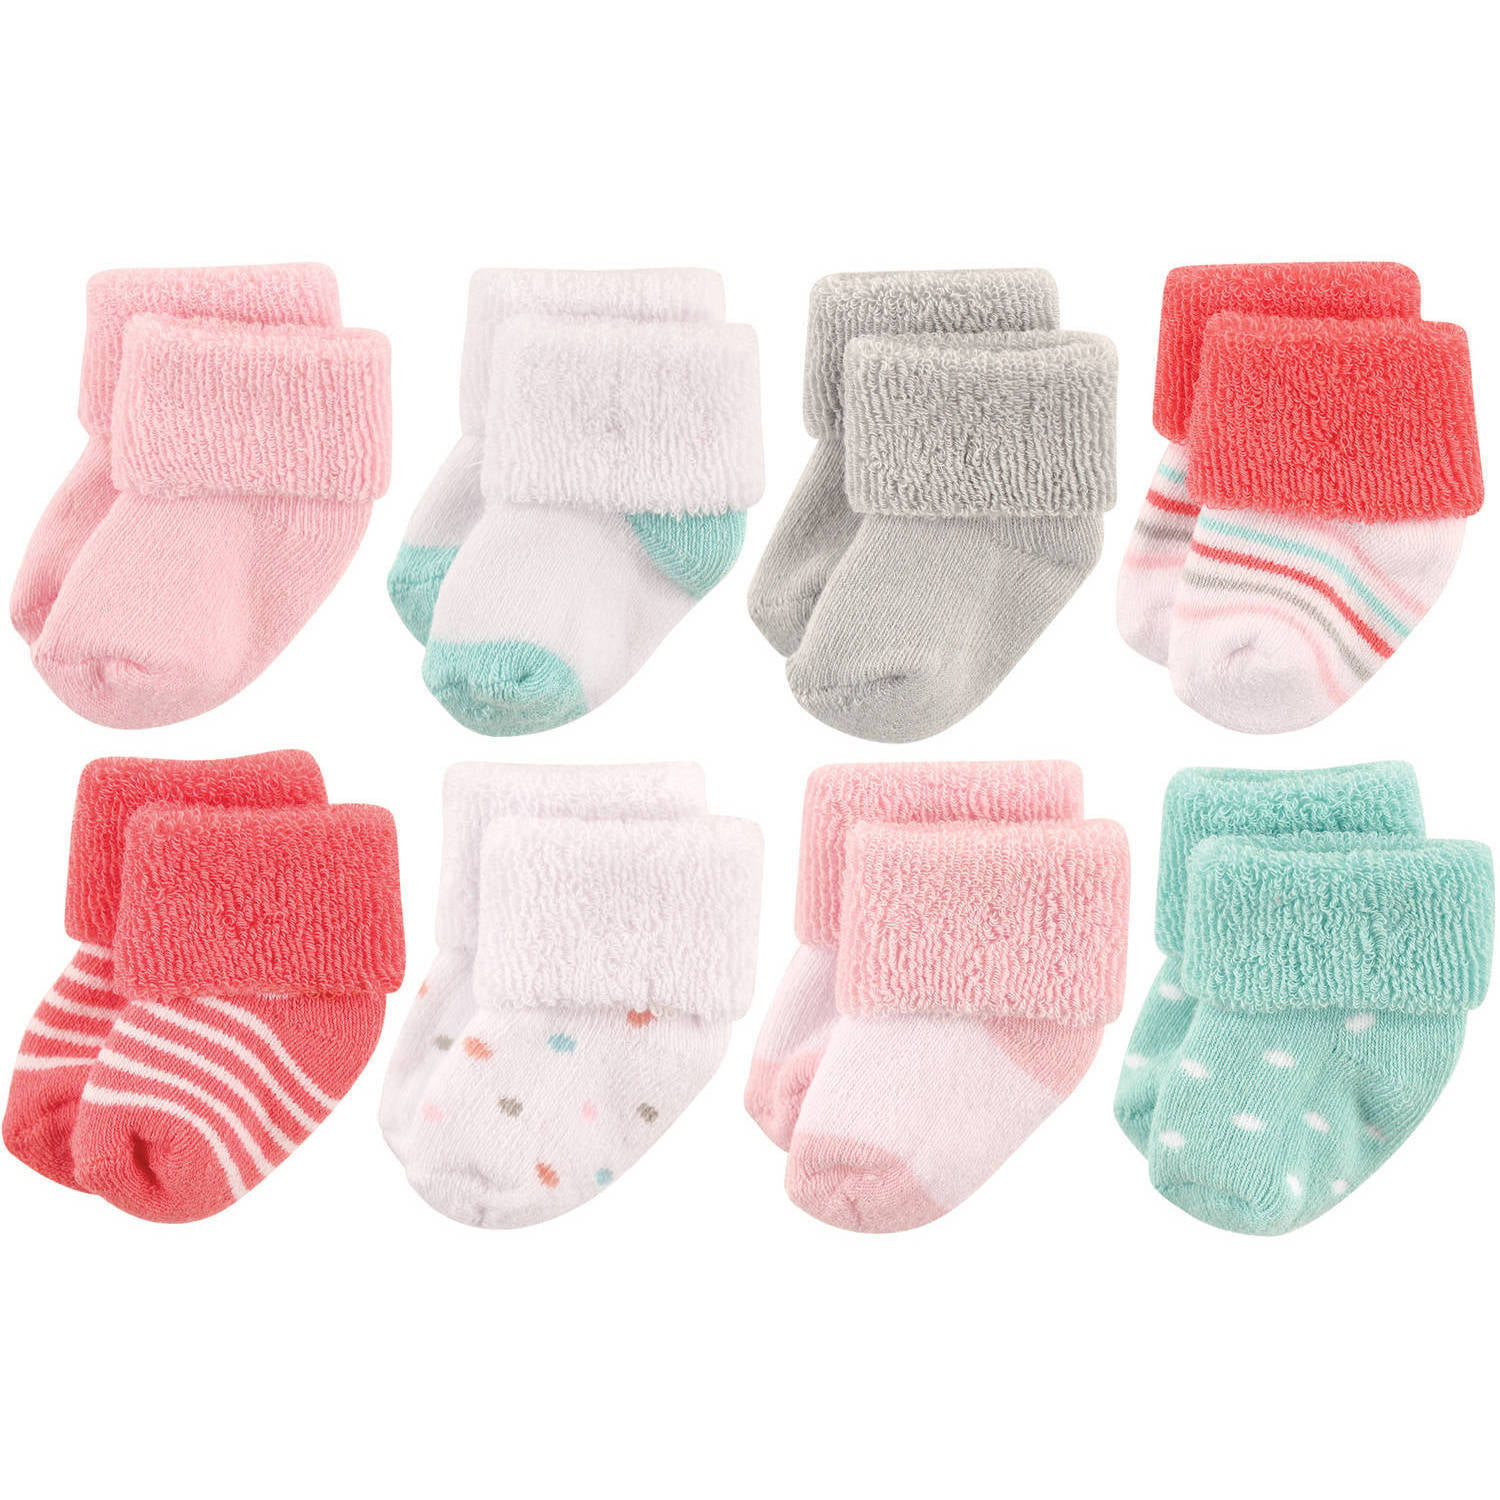 baby socks with grips walmart